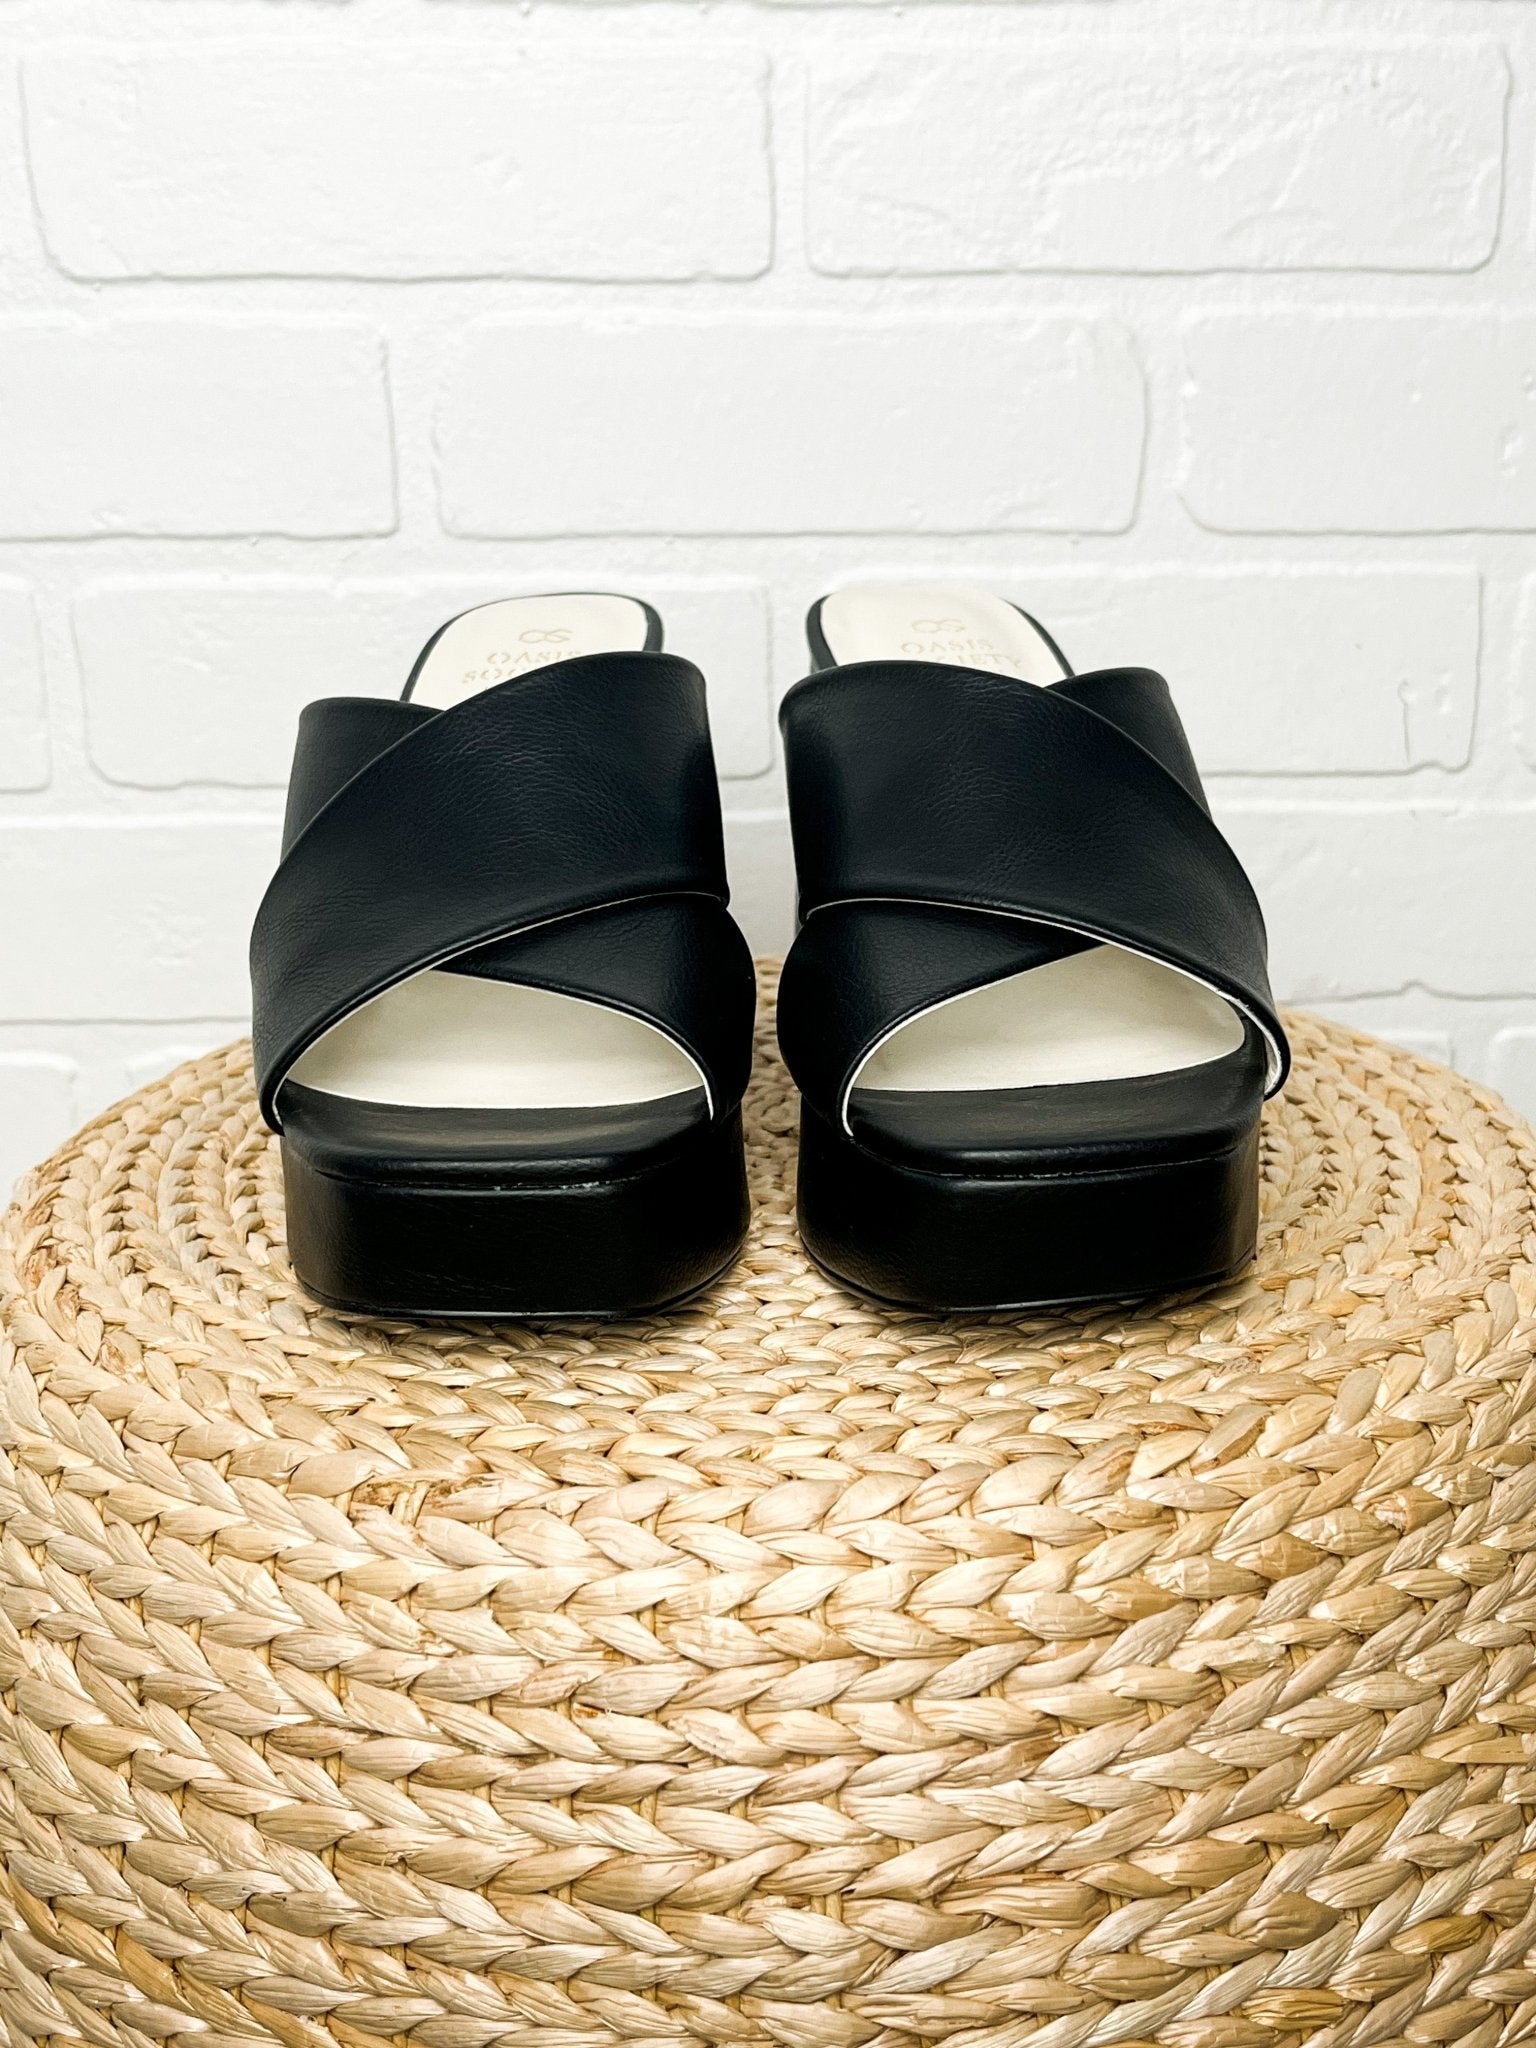 Carmen platform mule heel black - Trendy shoes - Fashion Shoes at Lush Fashion Lounge Boutique in Oklahoma City